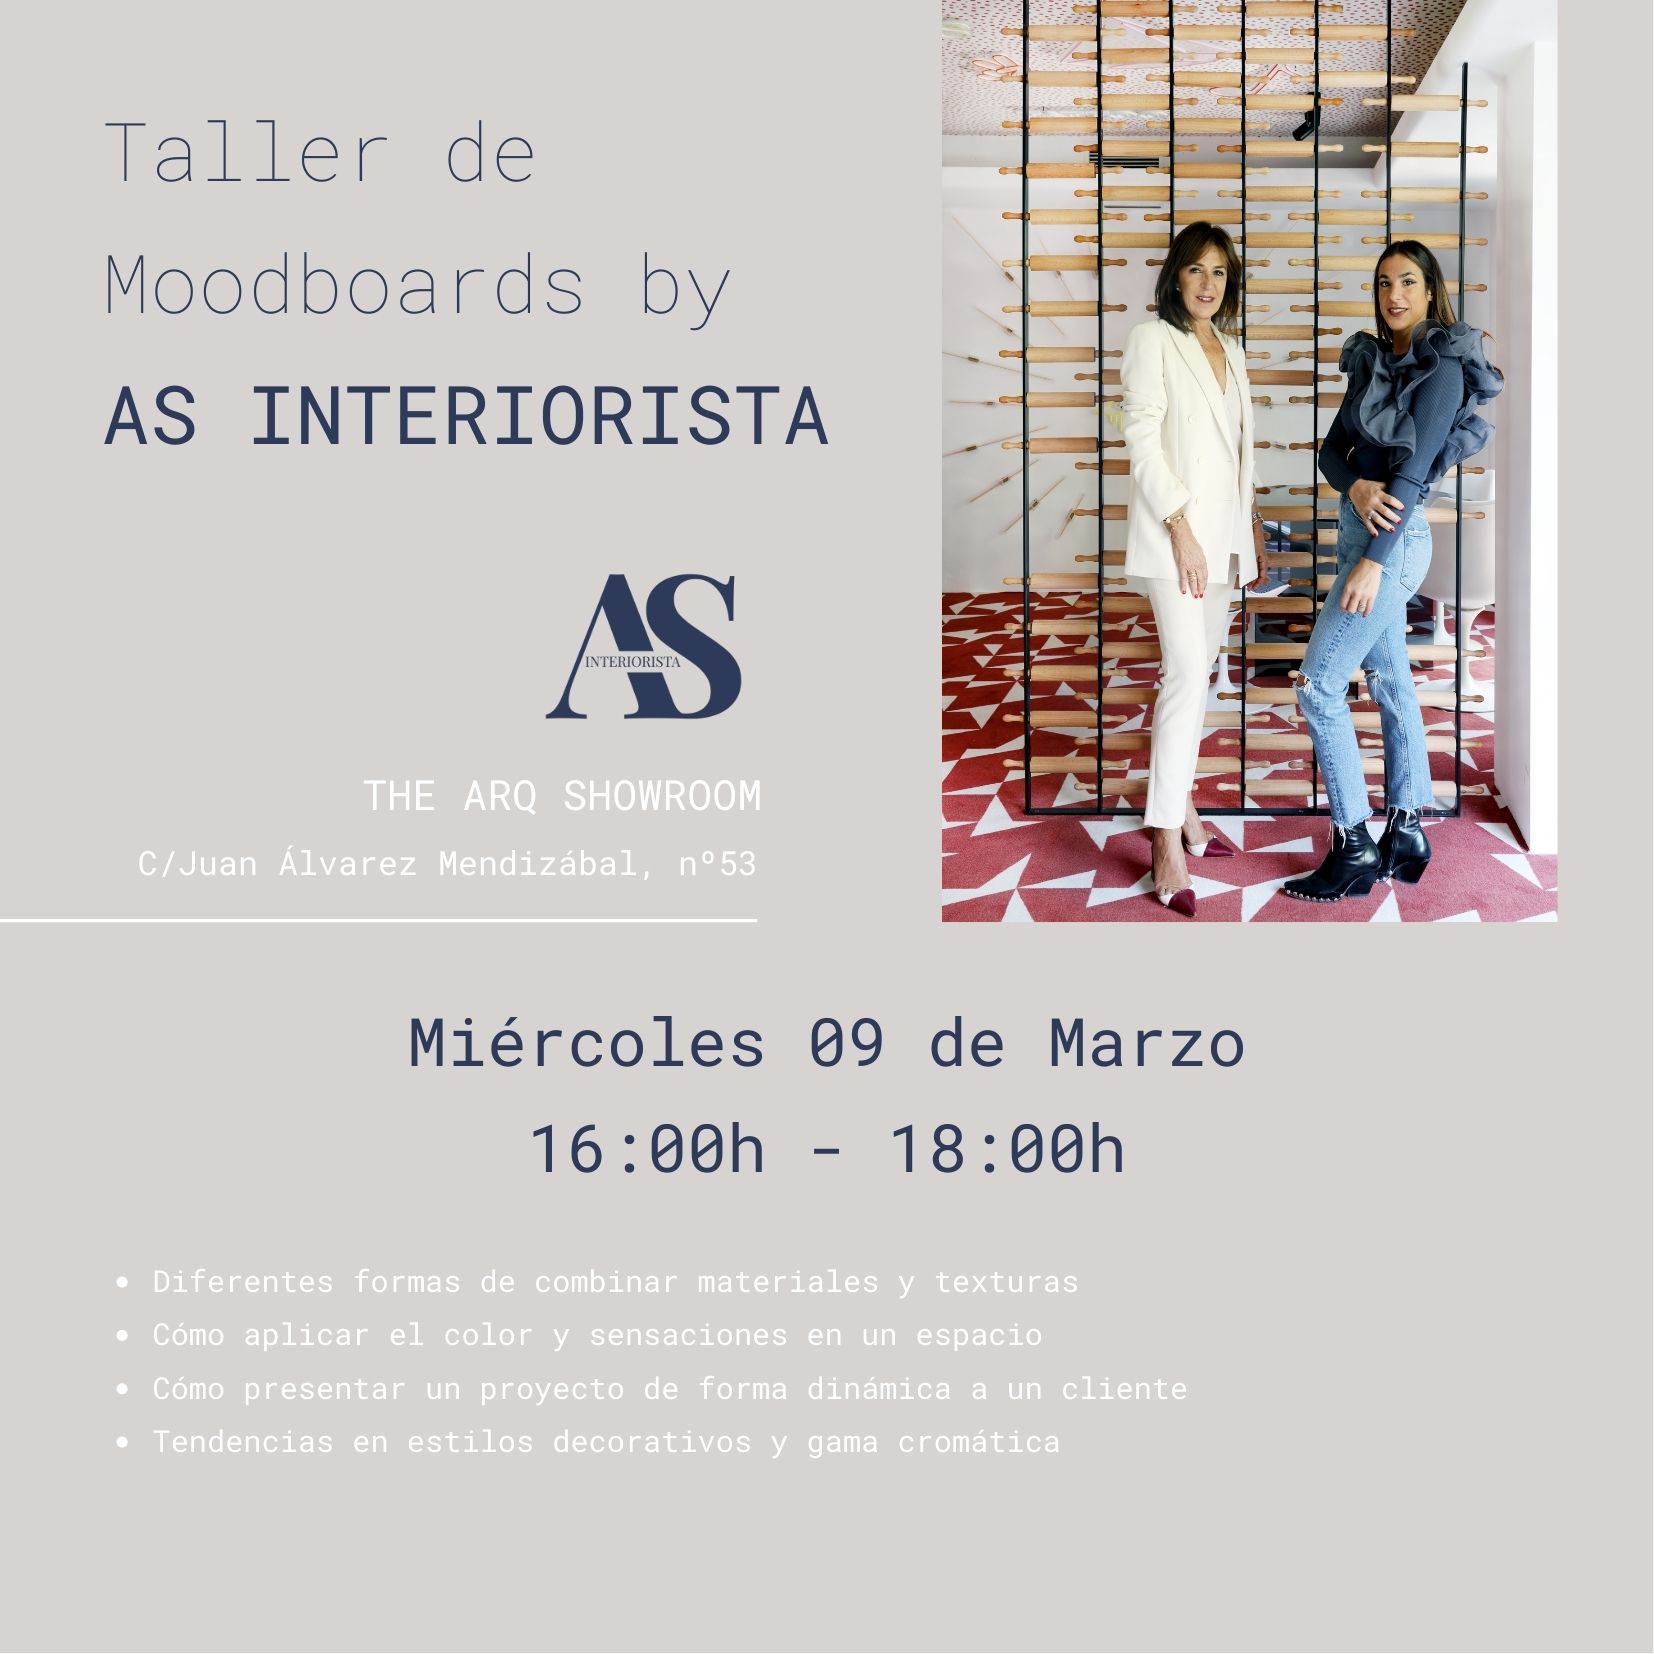 Taller de Moodboards by AS INTERIORISTA